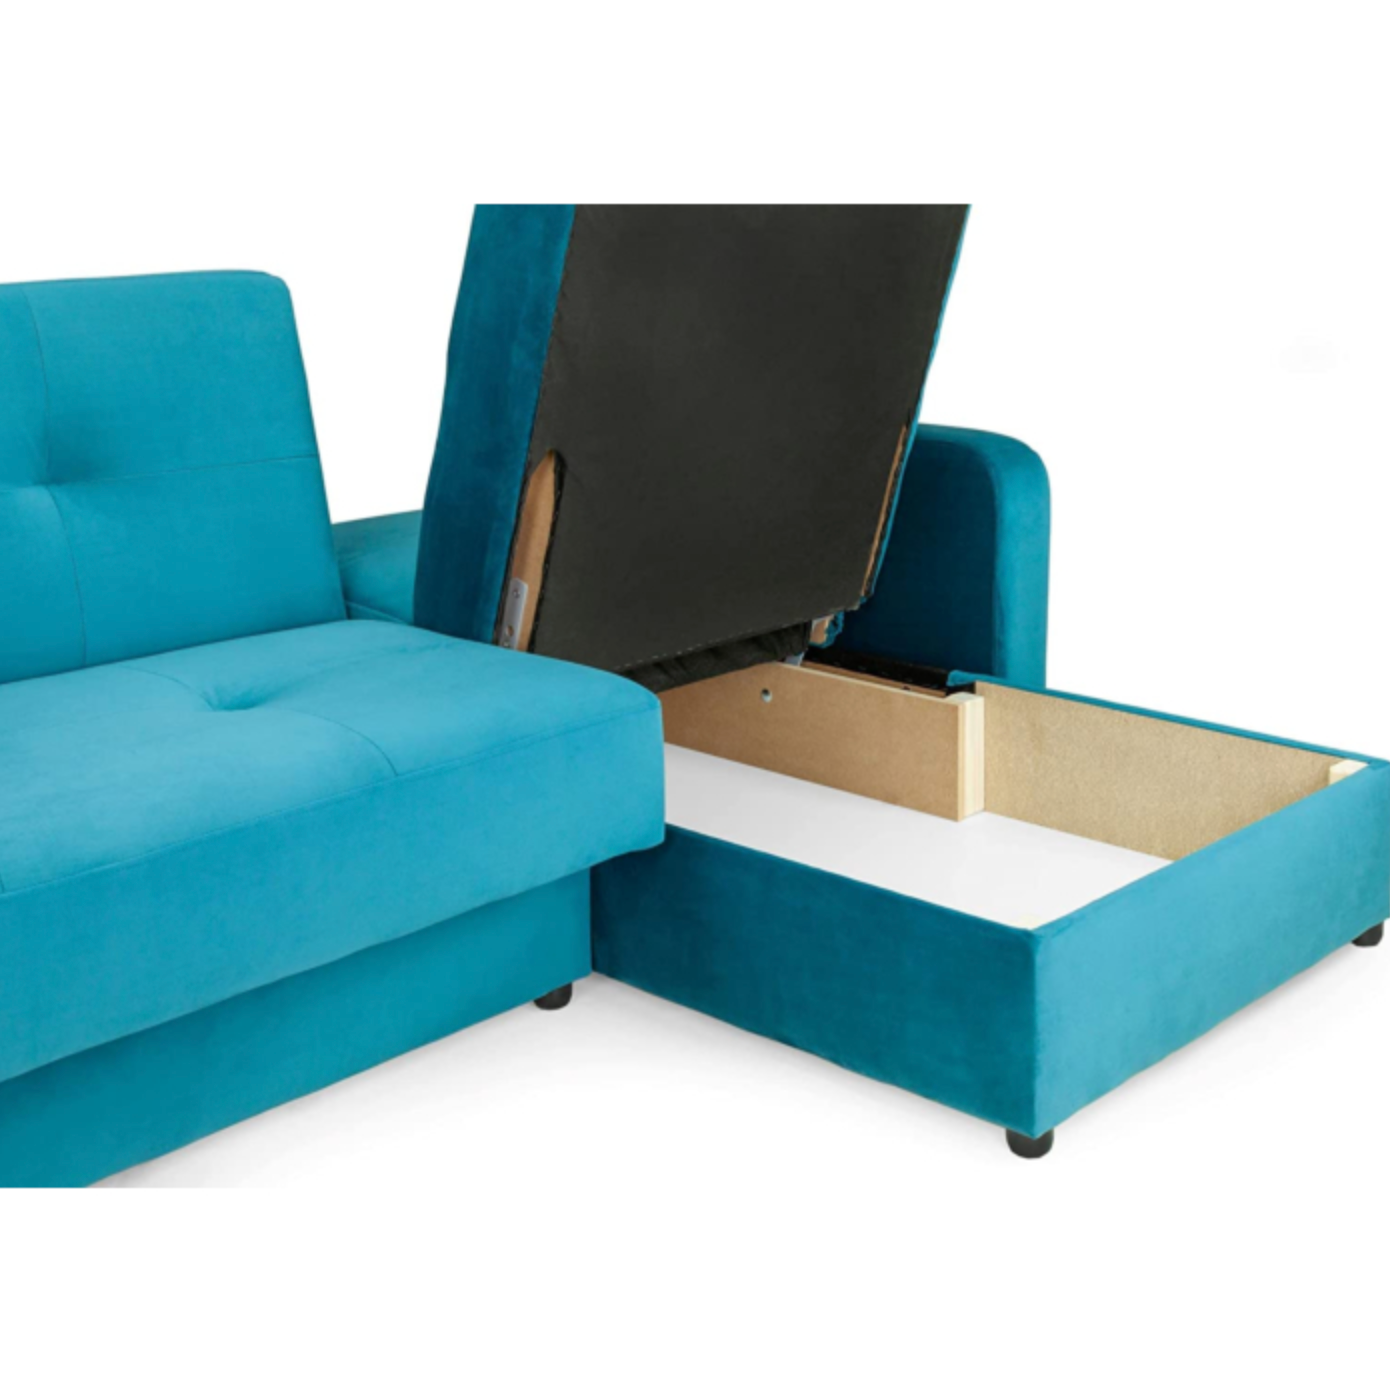 Destiny Corner Sofa Bed with Storage Teal Velvet Fabric